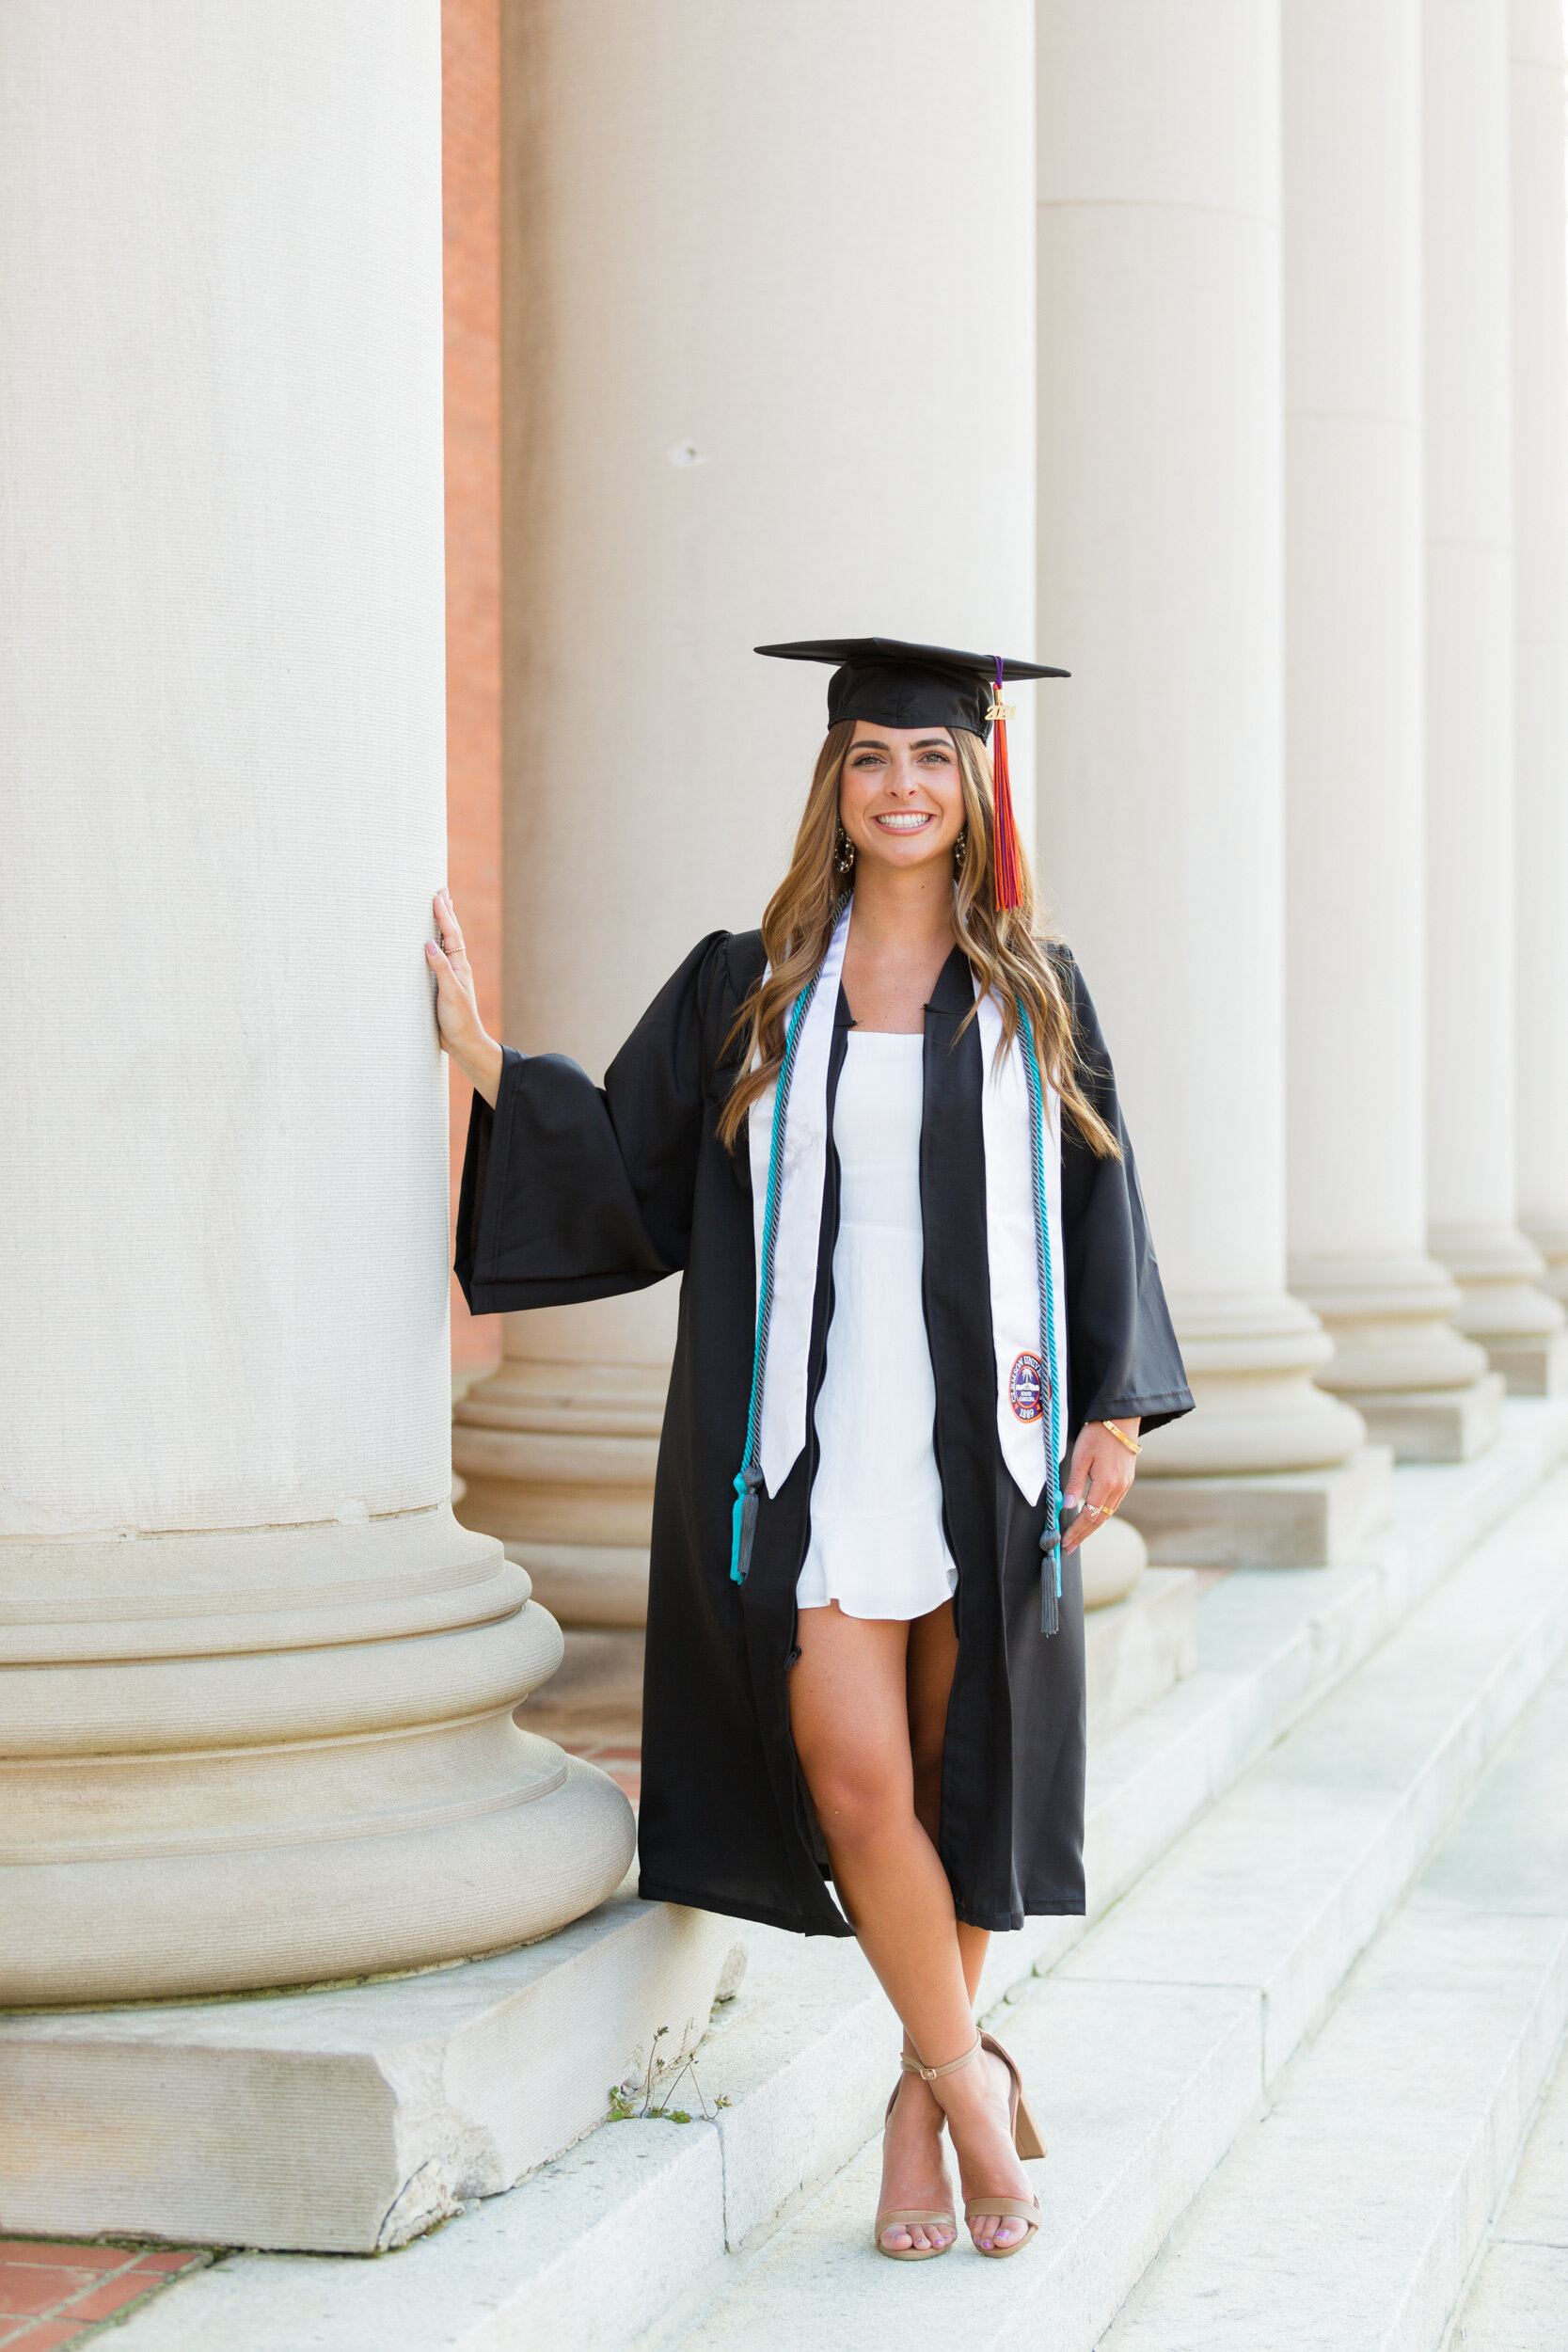 Dawson Powers Photography | Taylor-Clemson Graduation Photos